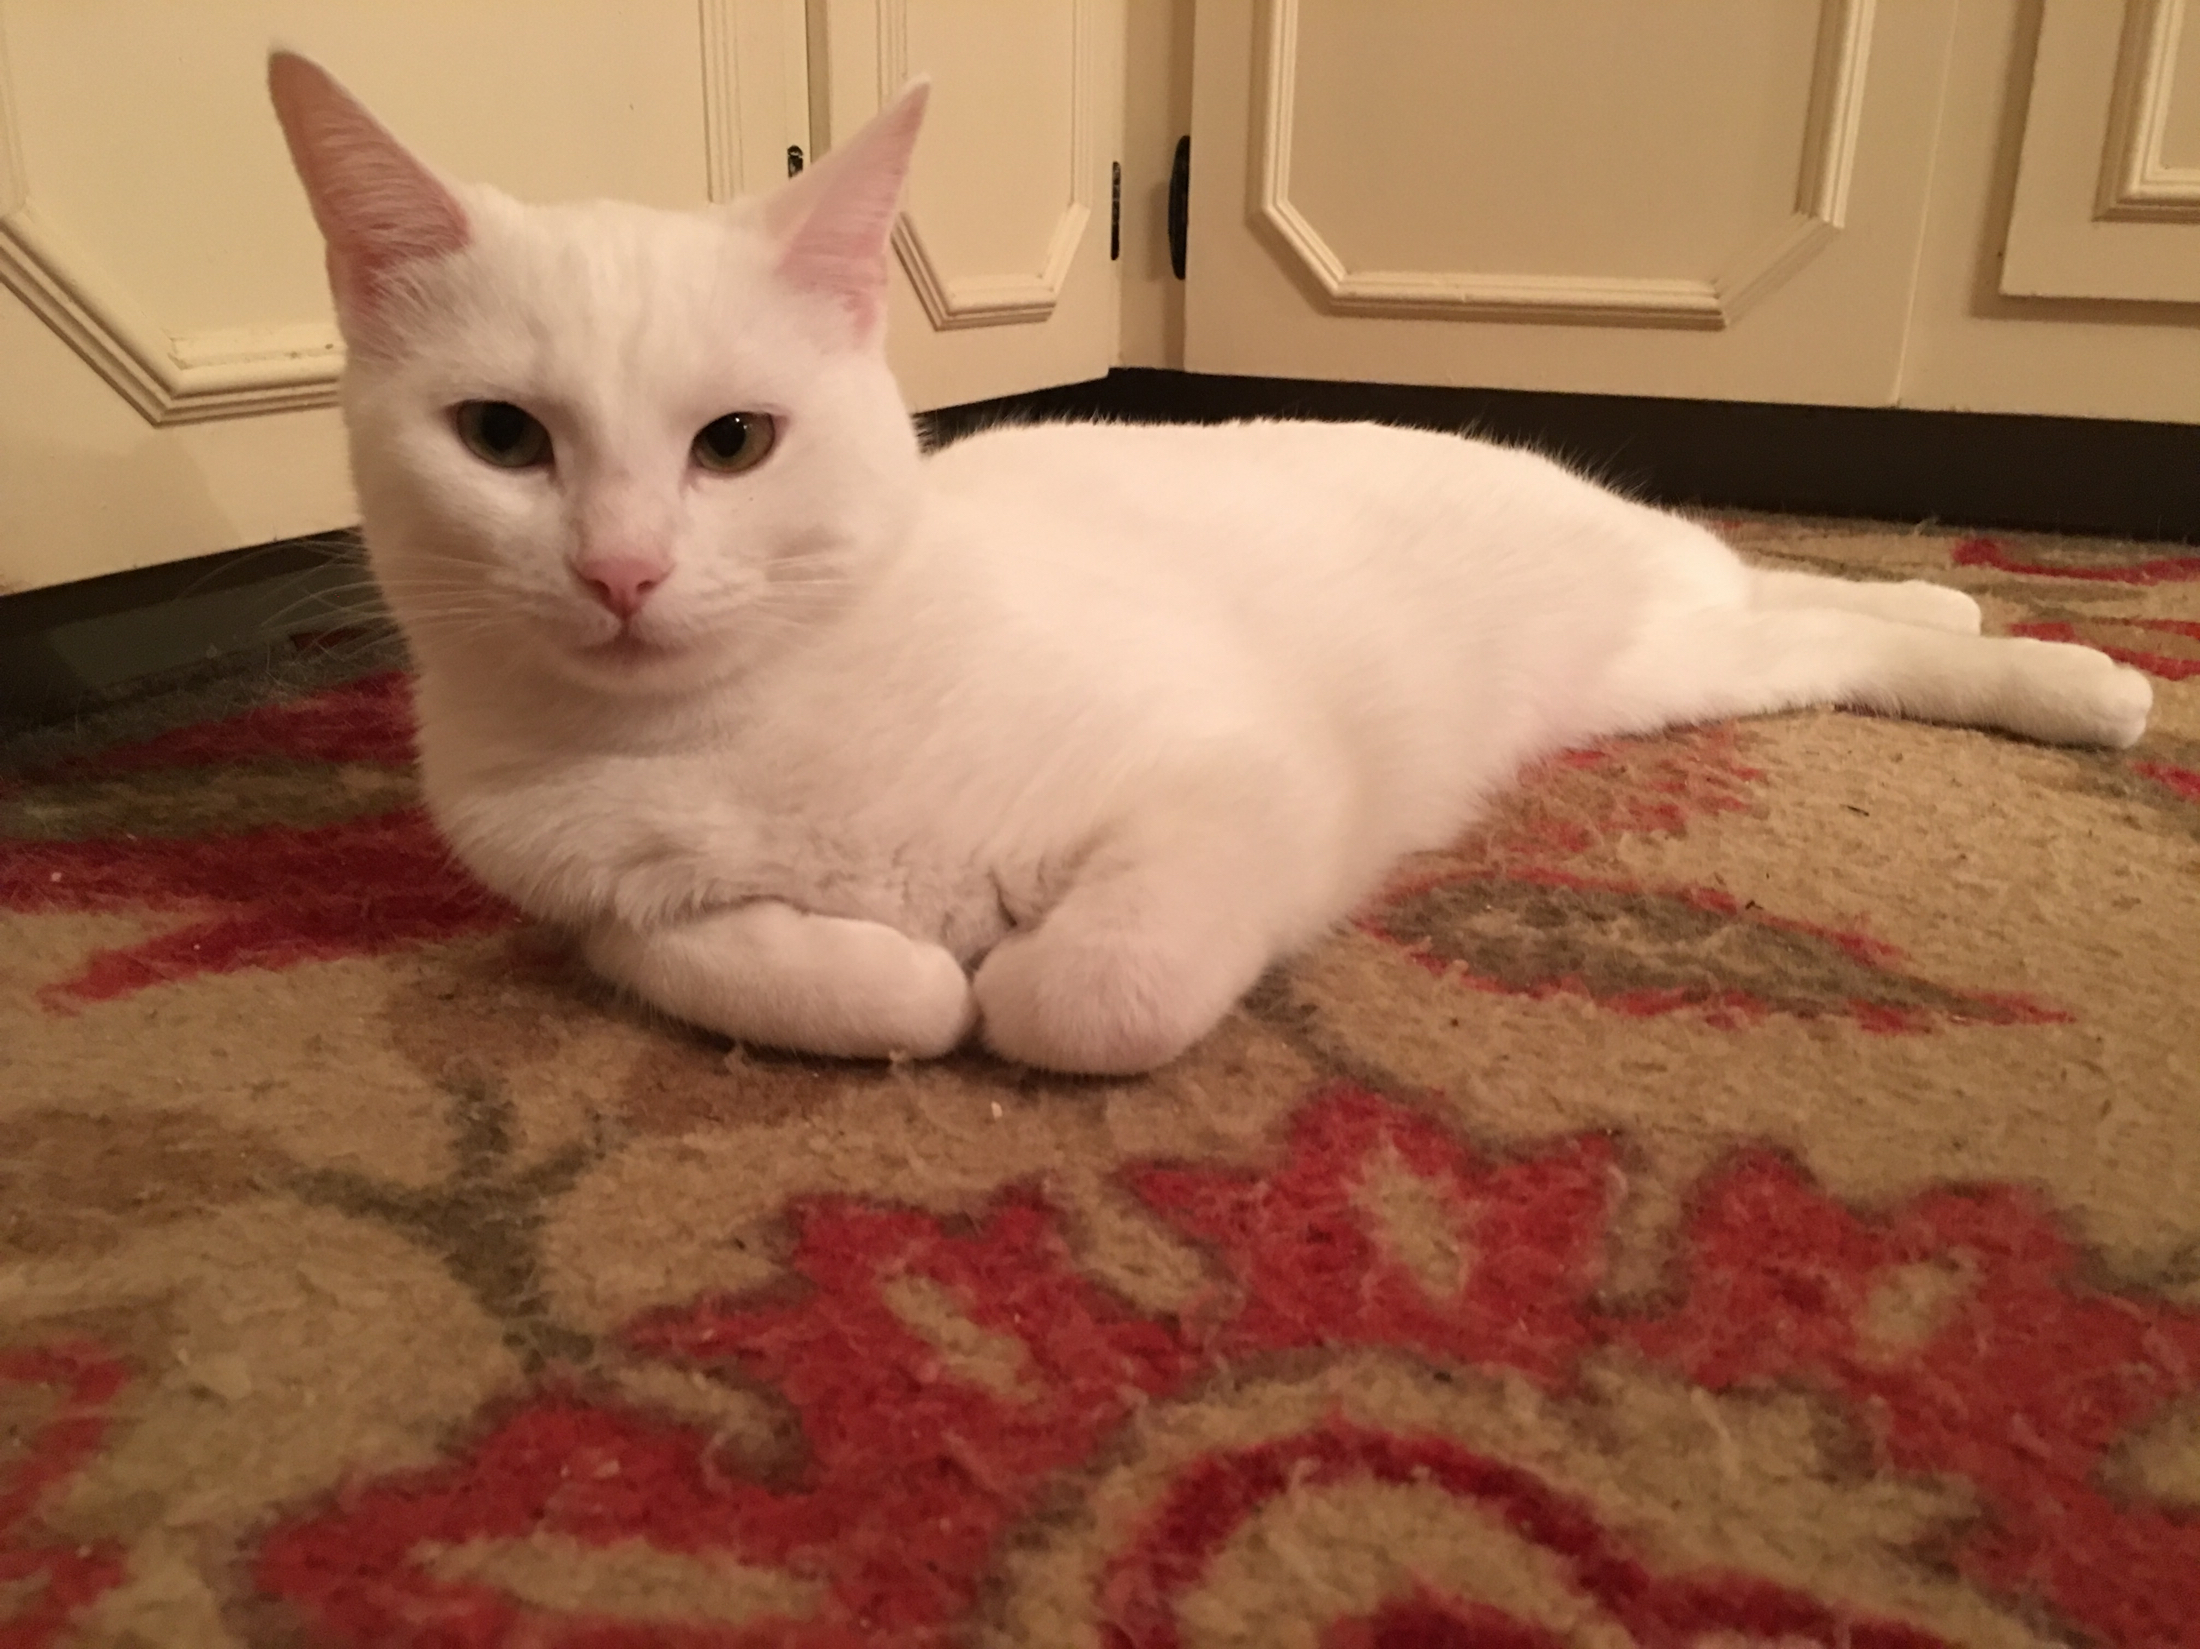 Belle on the famous carpet